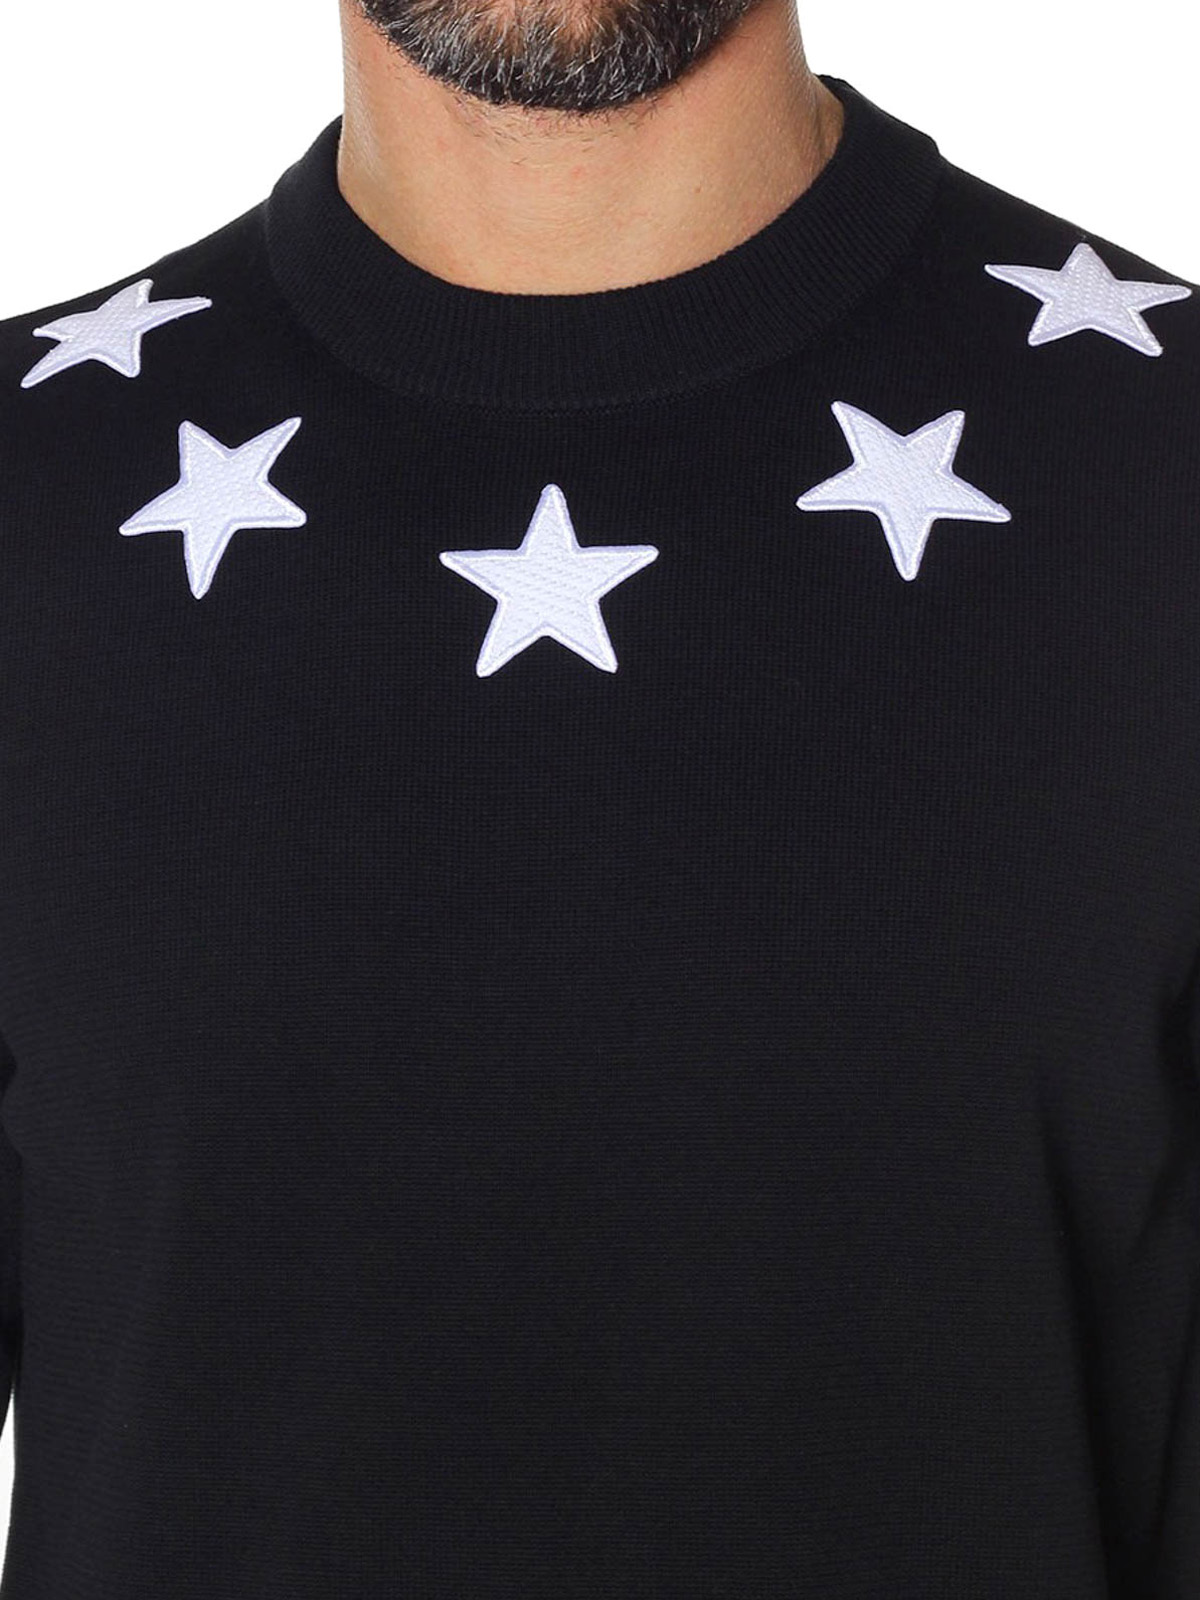 Givenchy - Star patch black cotton 